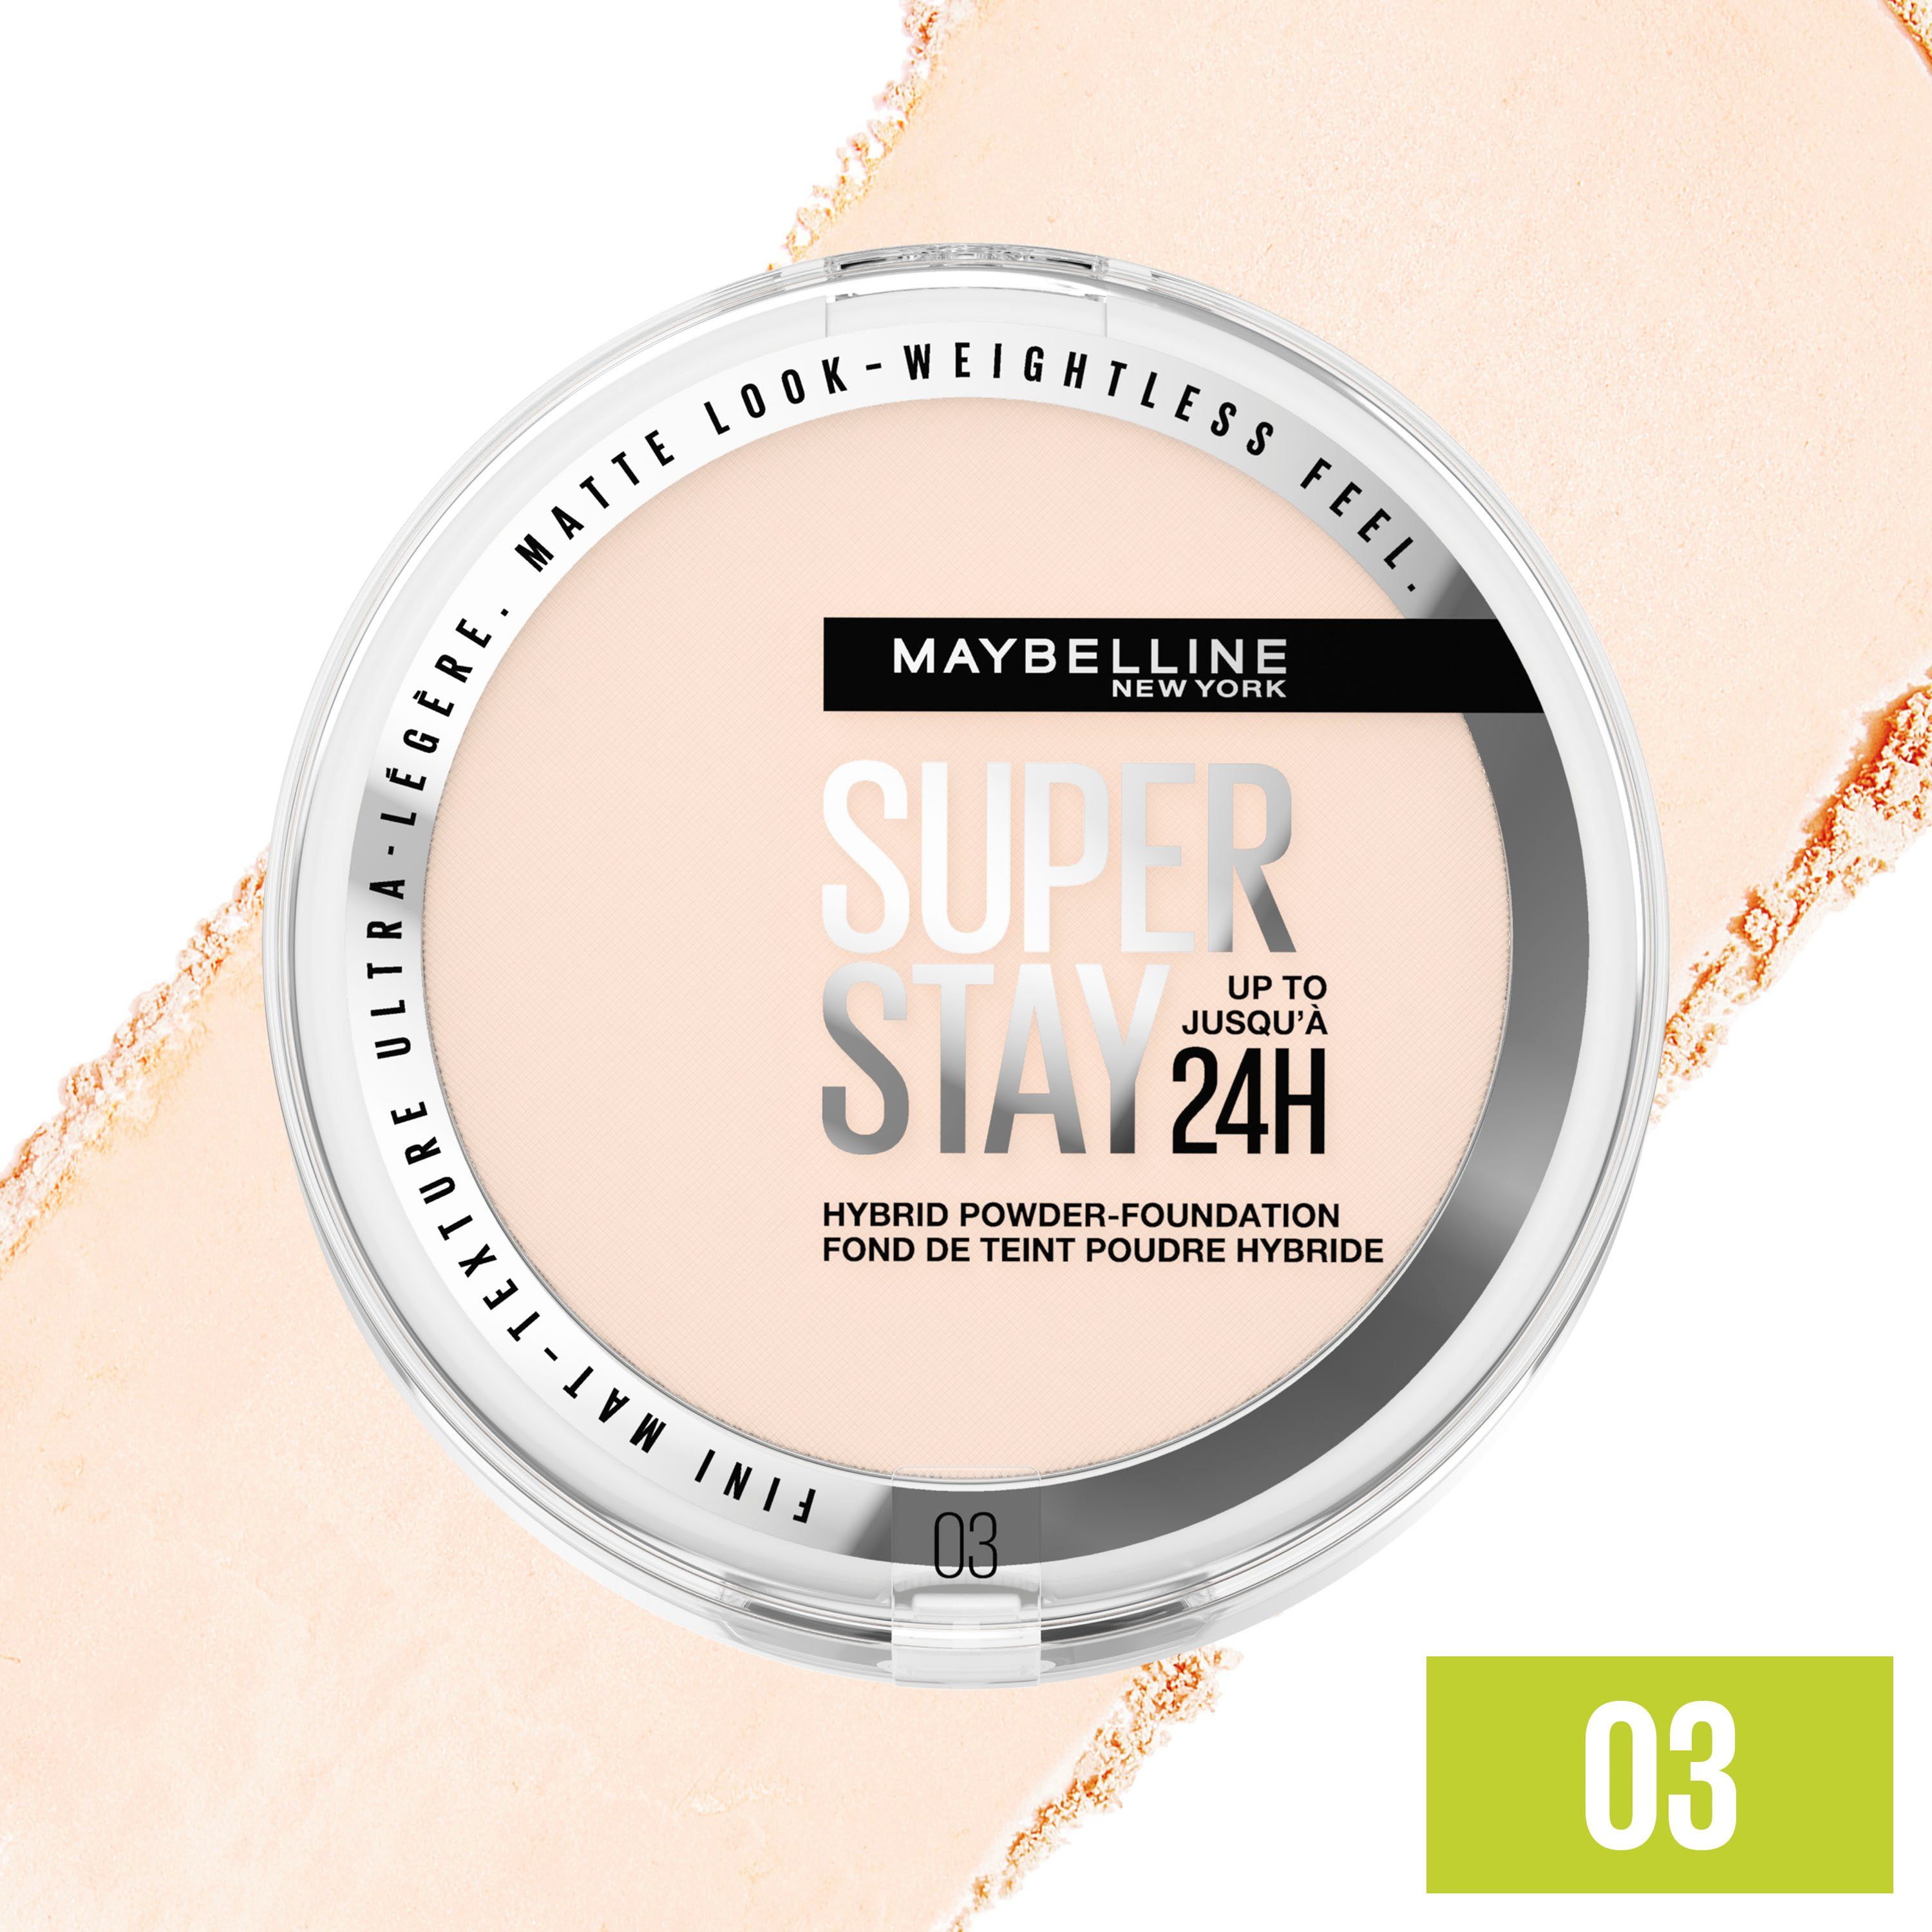 Puder MAYBELLINE YORK Foundation NEW Maybelline Stay Hybrides New Make-Up Super York